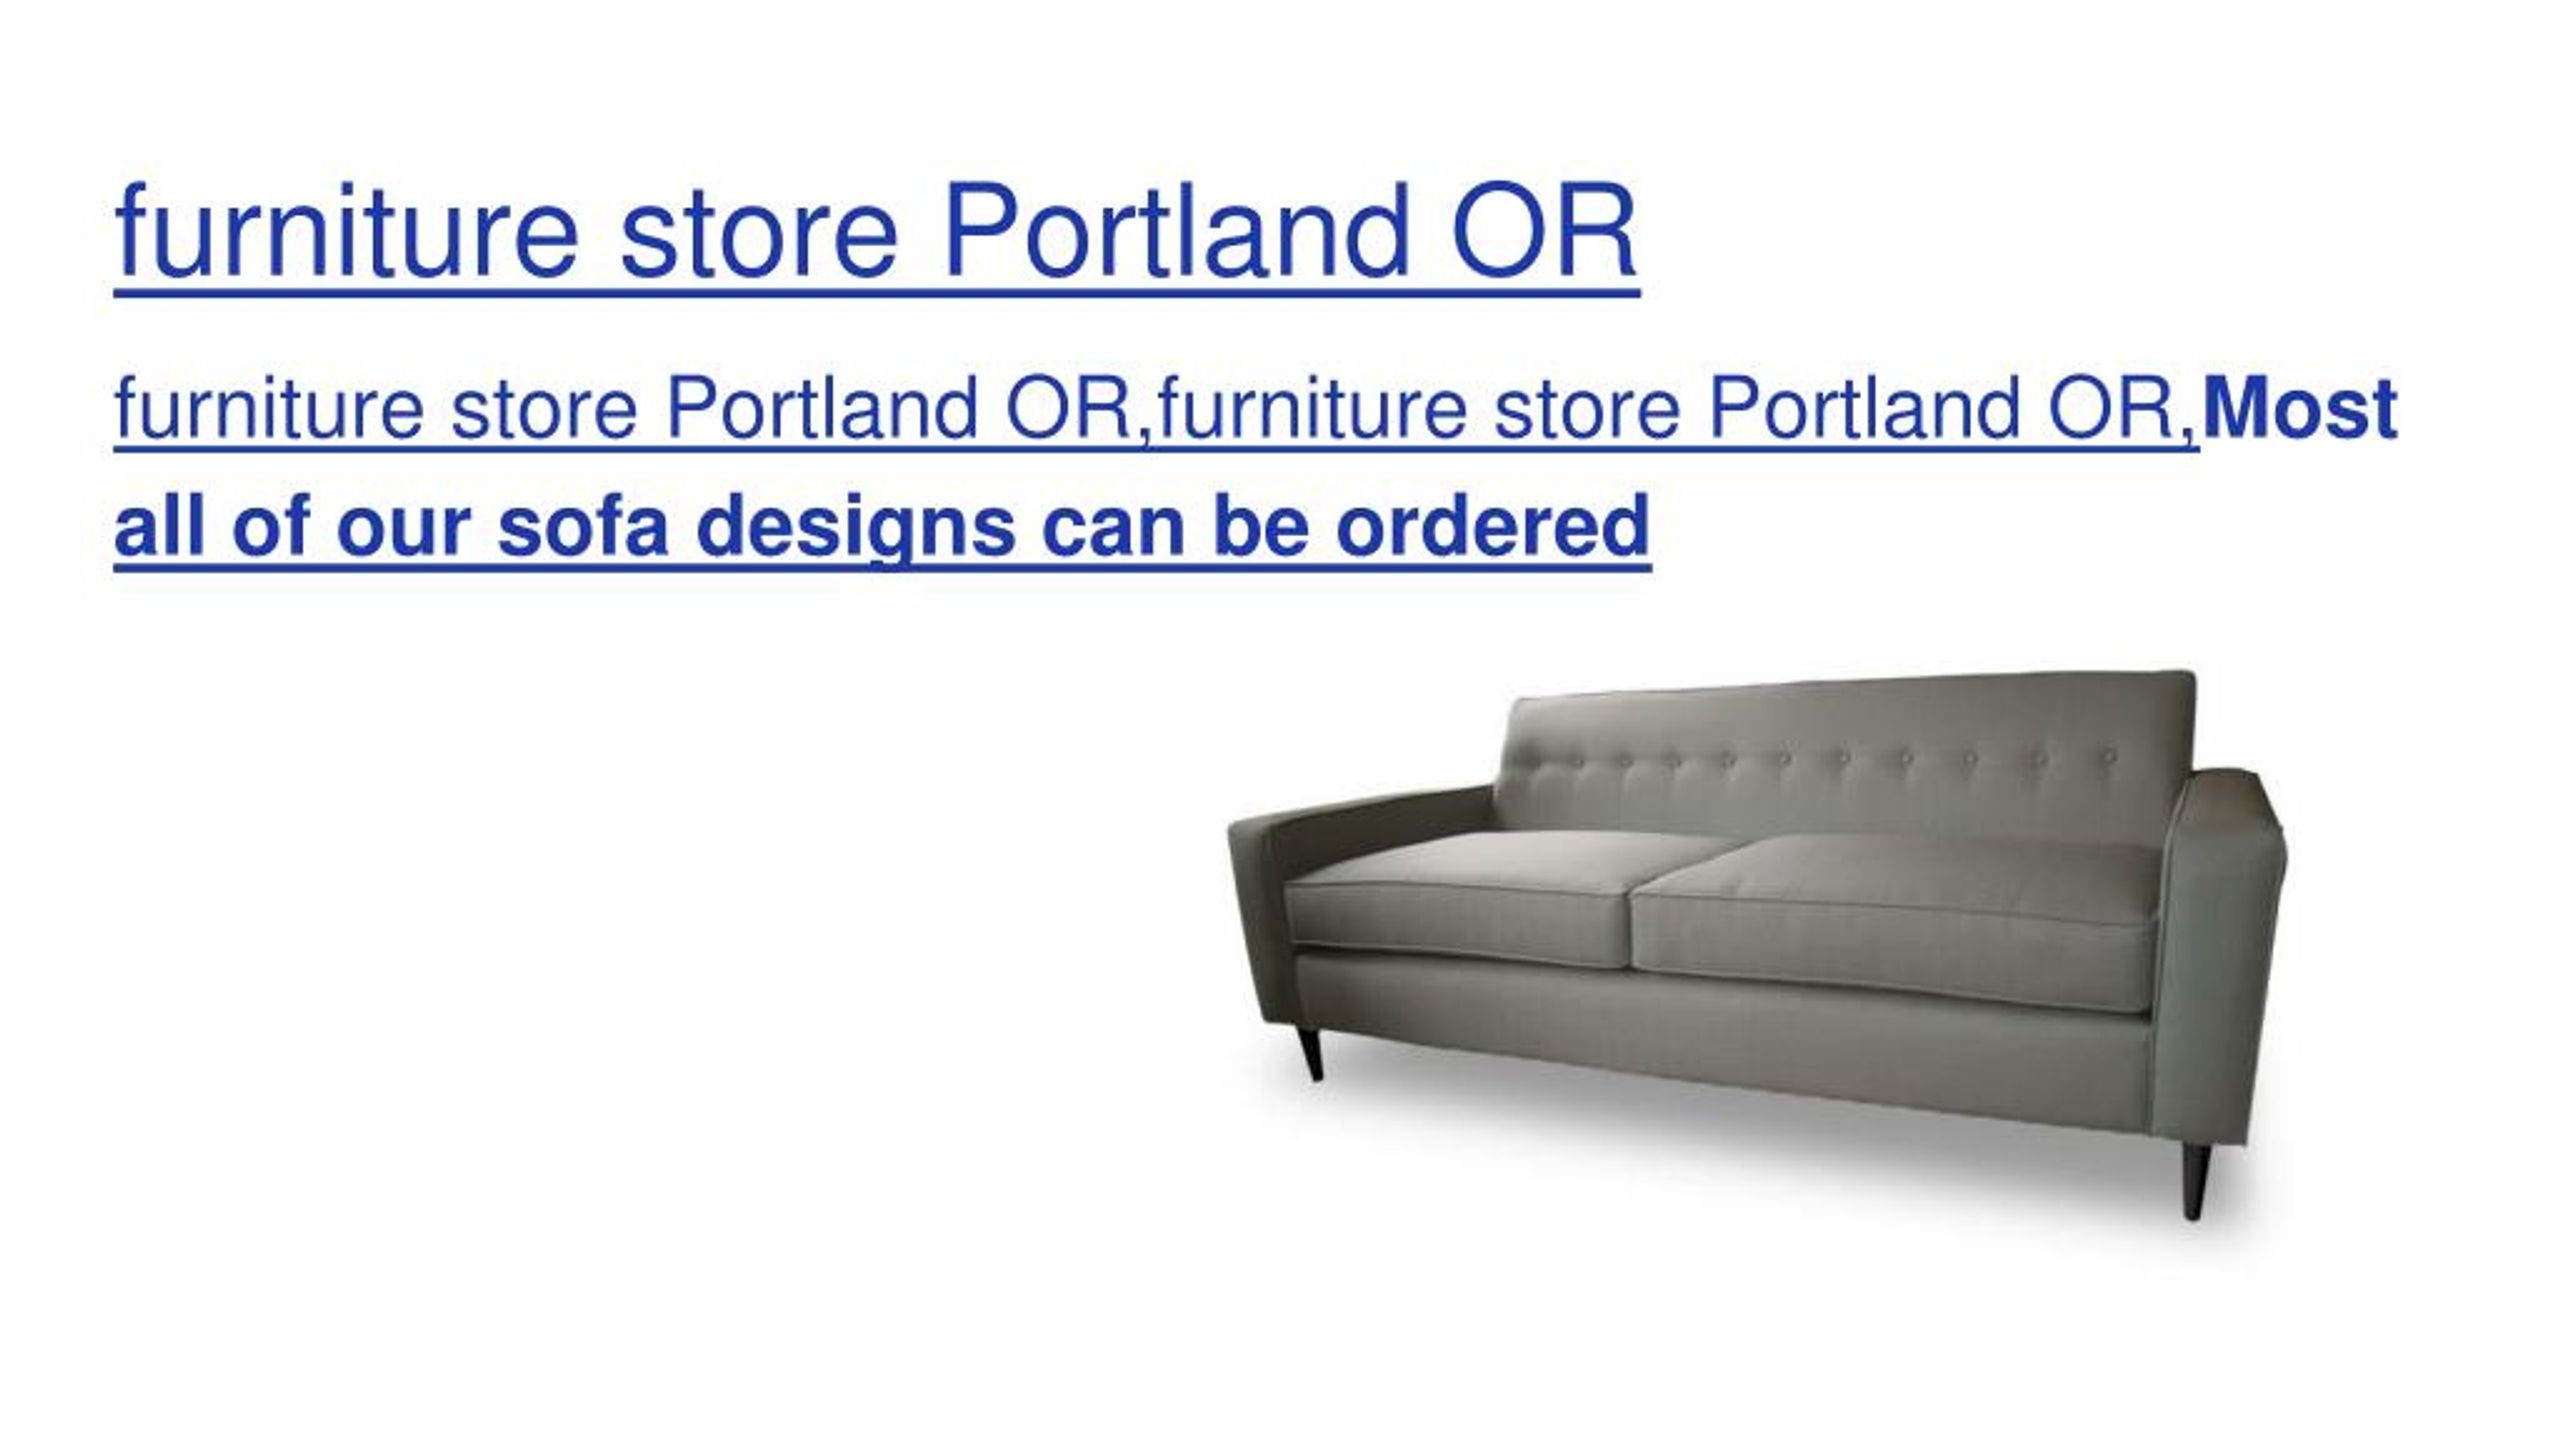 PPT - Furniture store & custom sofas furniture Portland OR ...